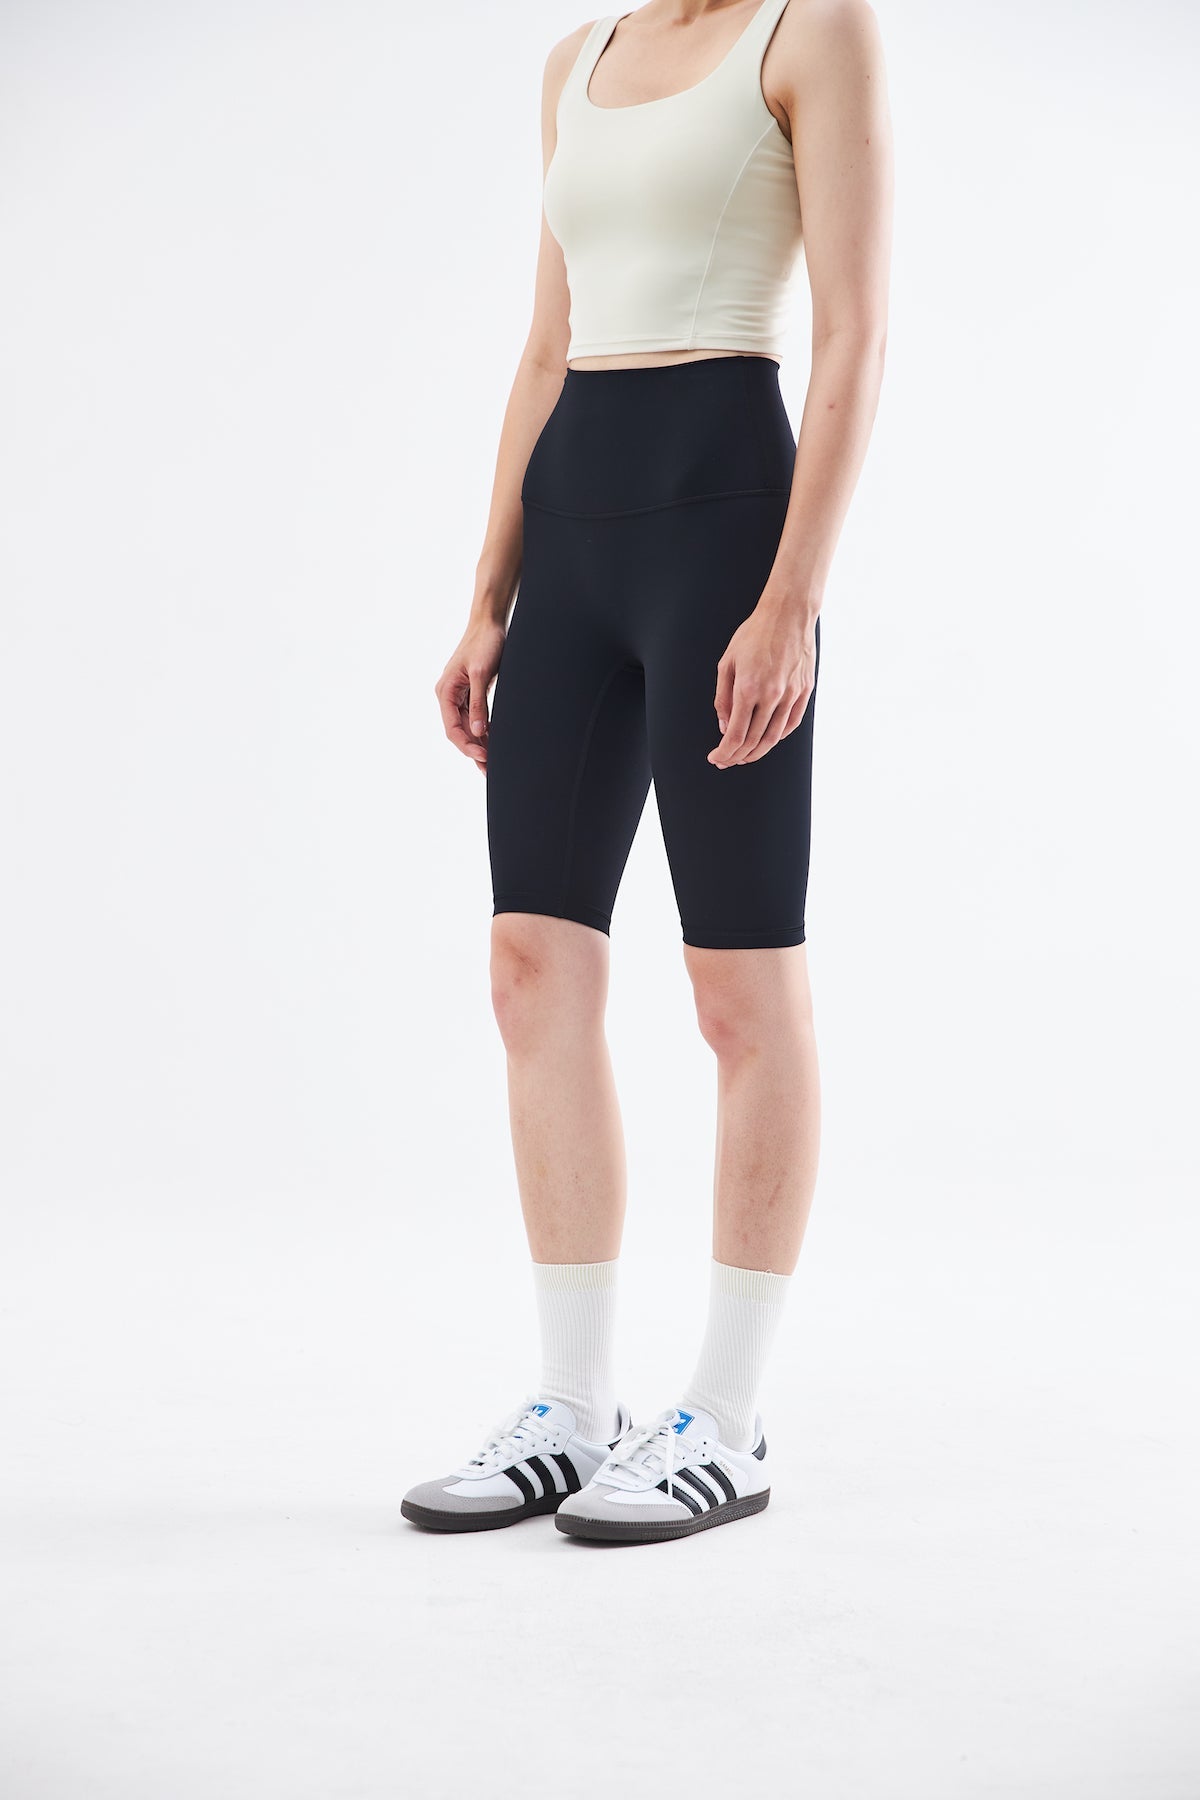 Asana Biker Shorts In Black